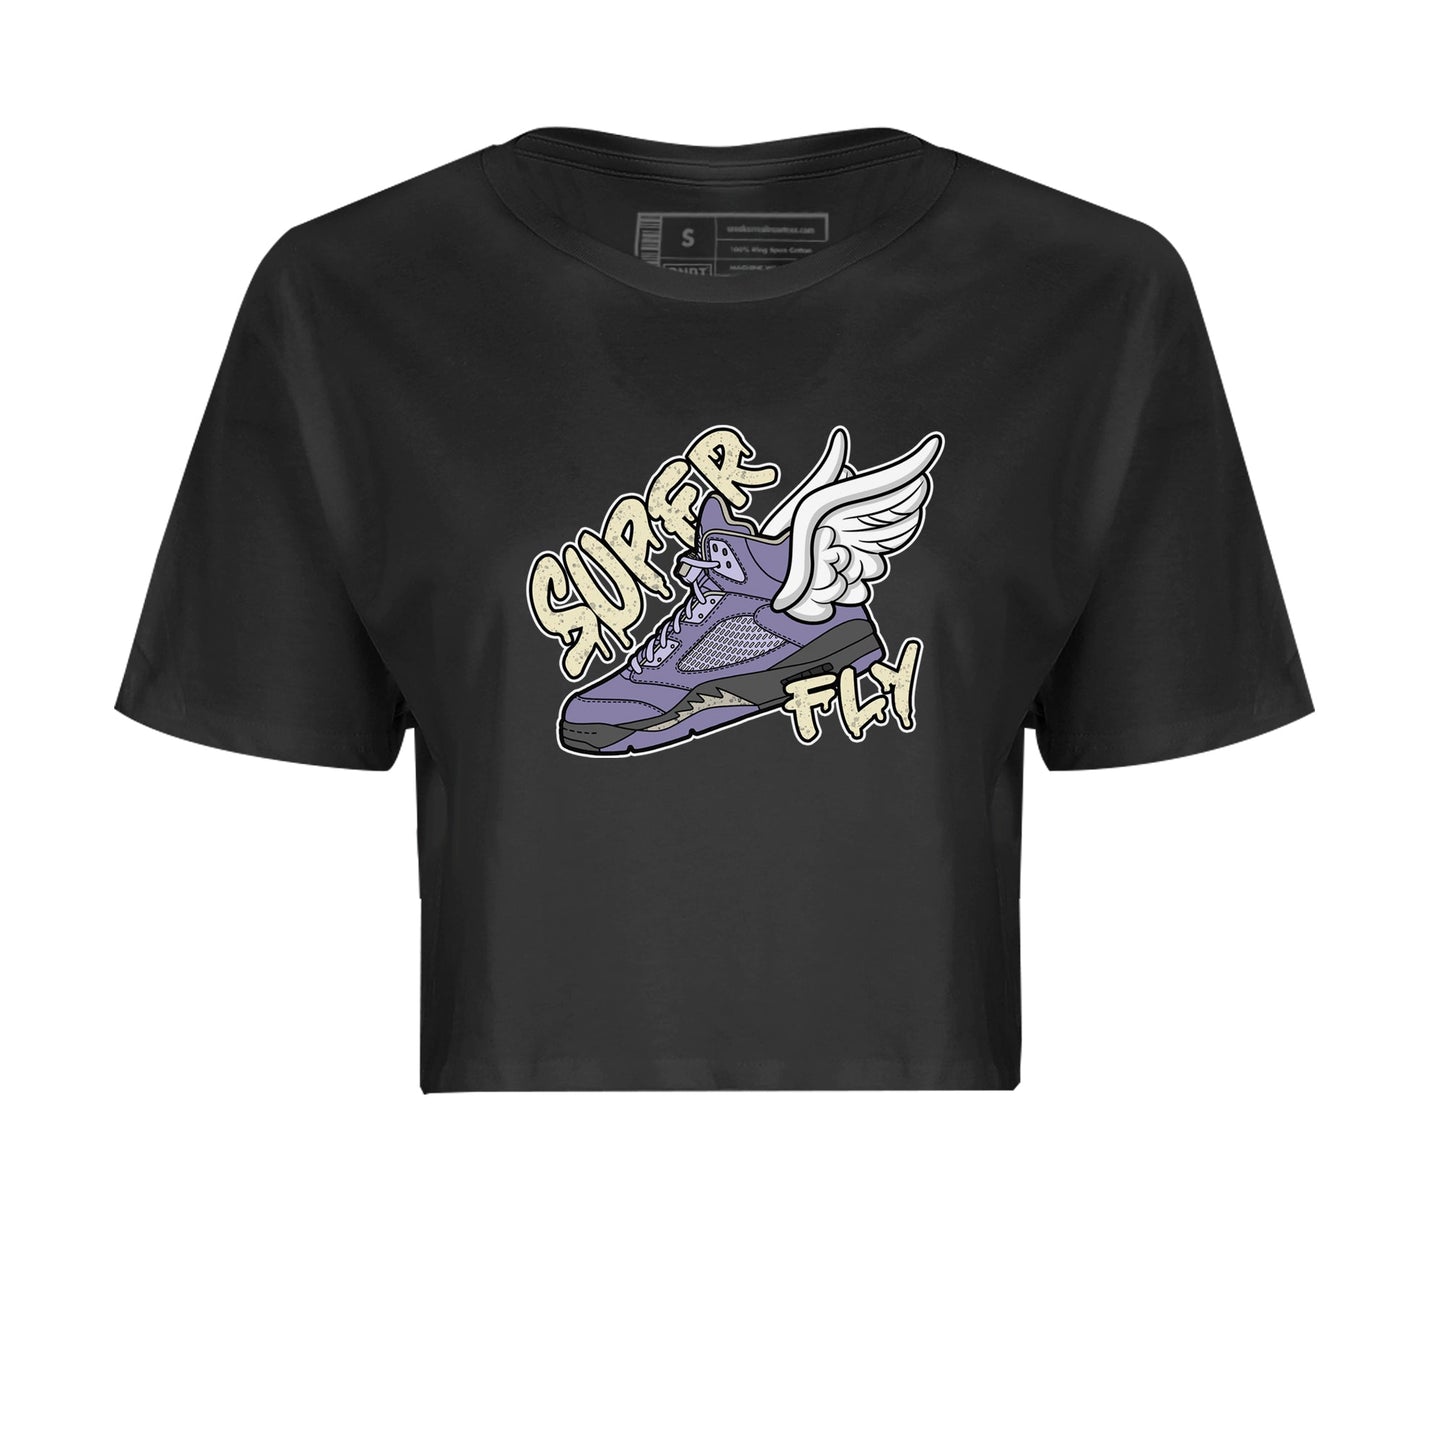 Air Jordan 5 Indigo Haze Sneaker Match Tees Super Fly Sneaker Tees AJ5 Indigo Haze Sneaker Release Tees Women's Shirts Black 2